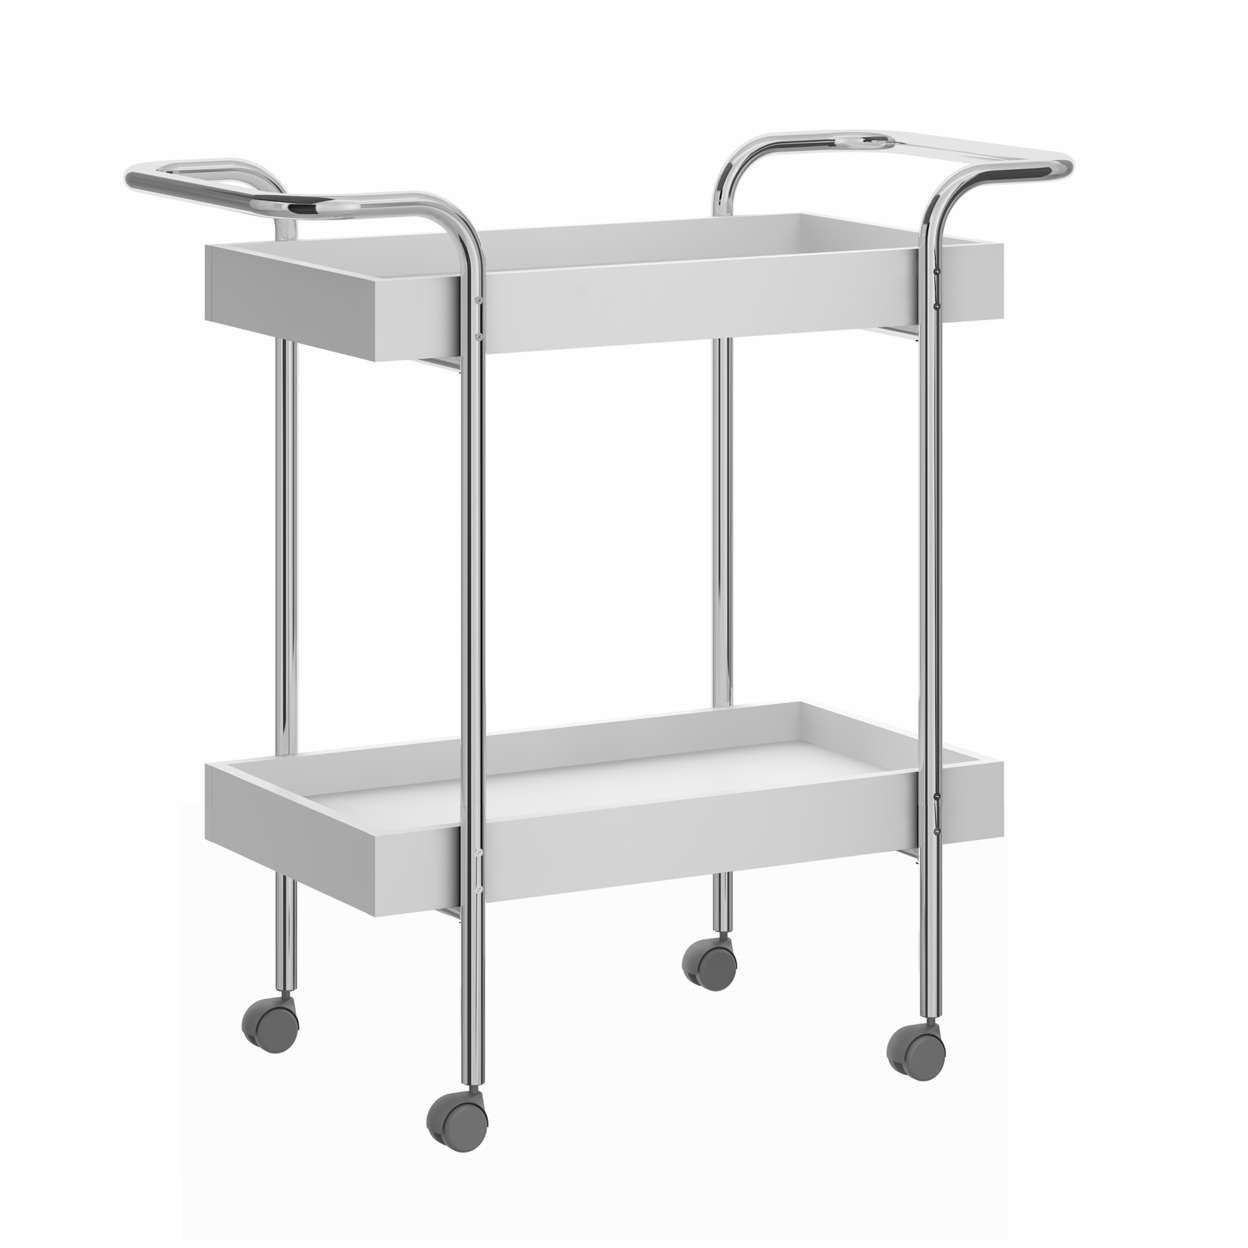 Storage Cart With 2 Tier Design And Metal Frame, White And Chrome- Saltoro Sherpi